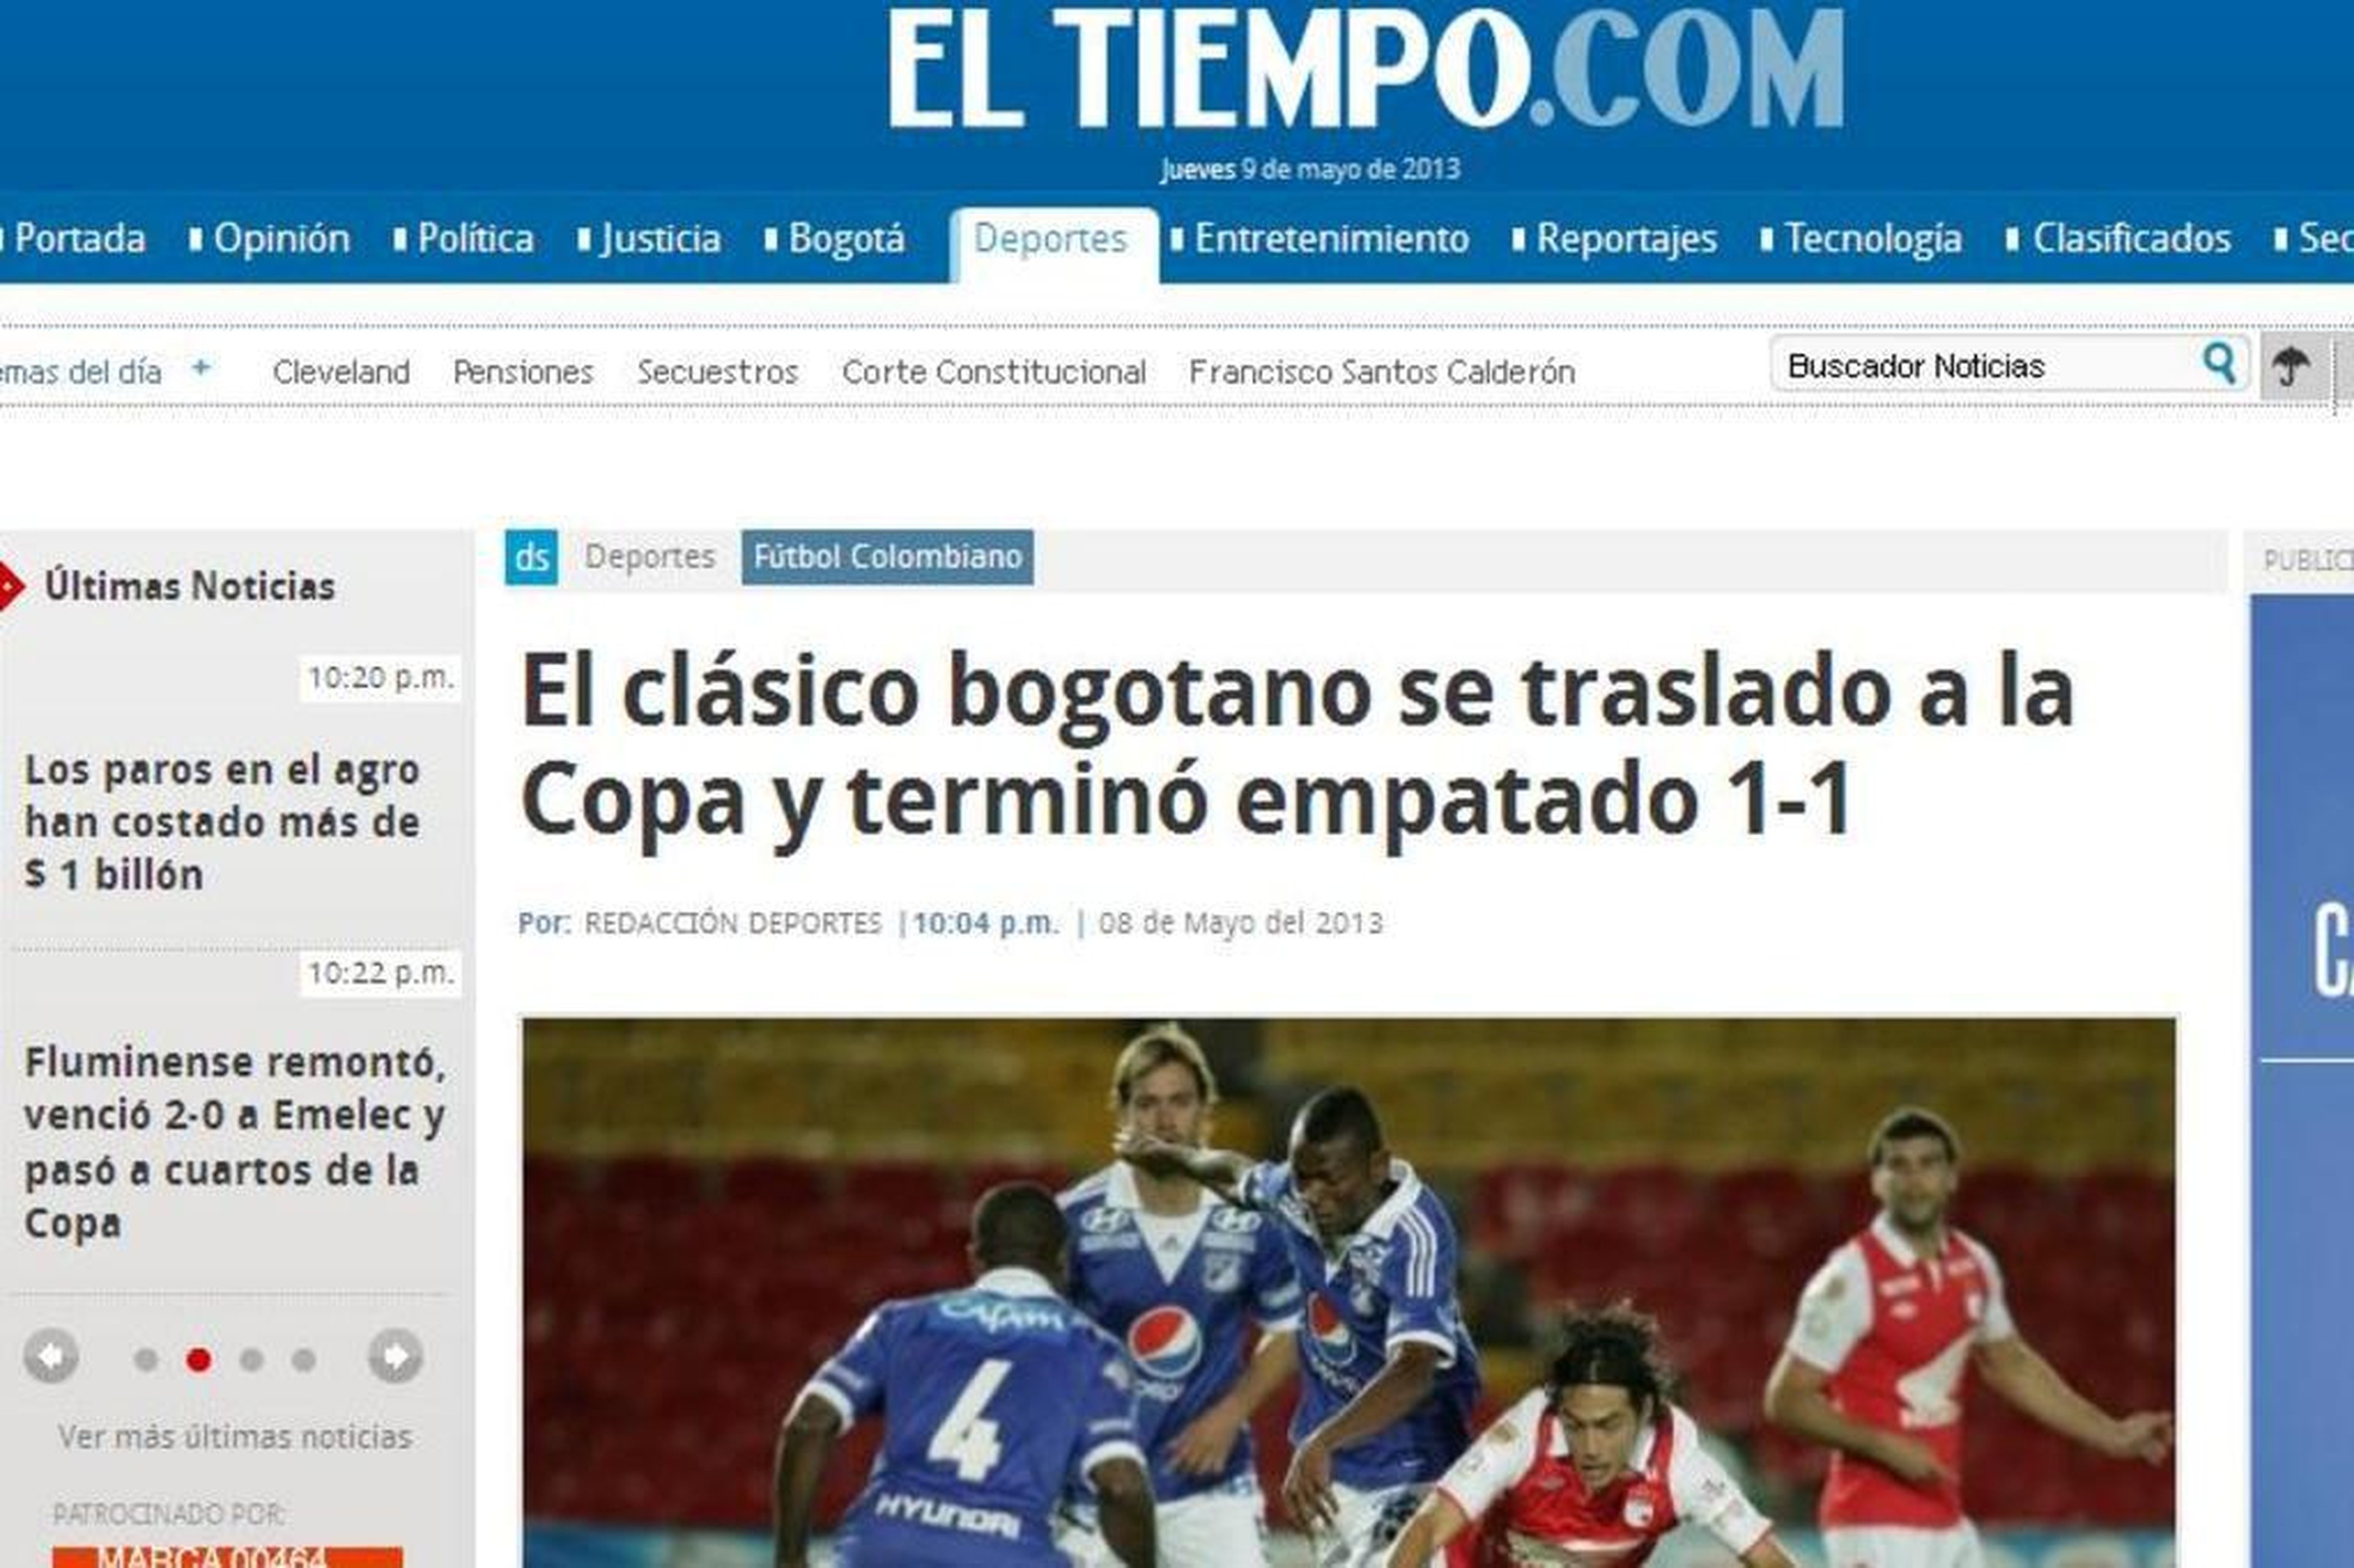 Reprodução/El Tiempo